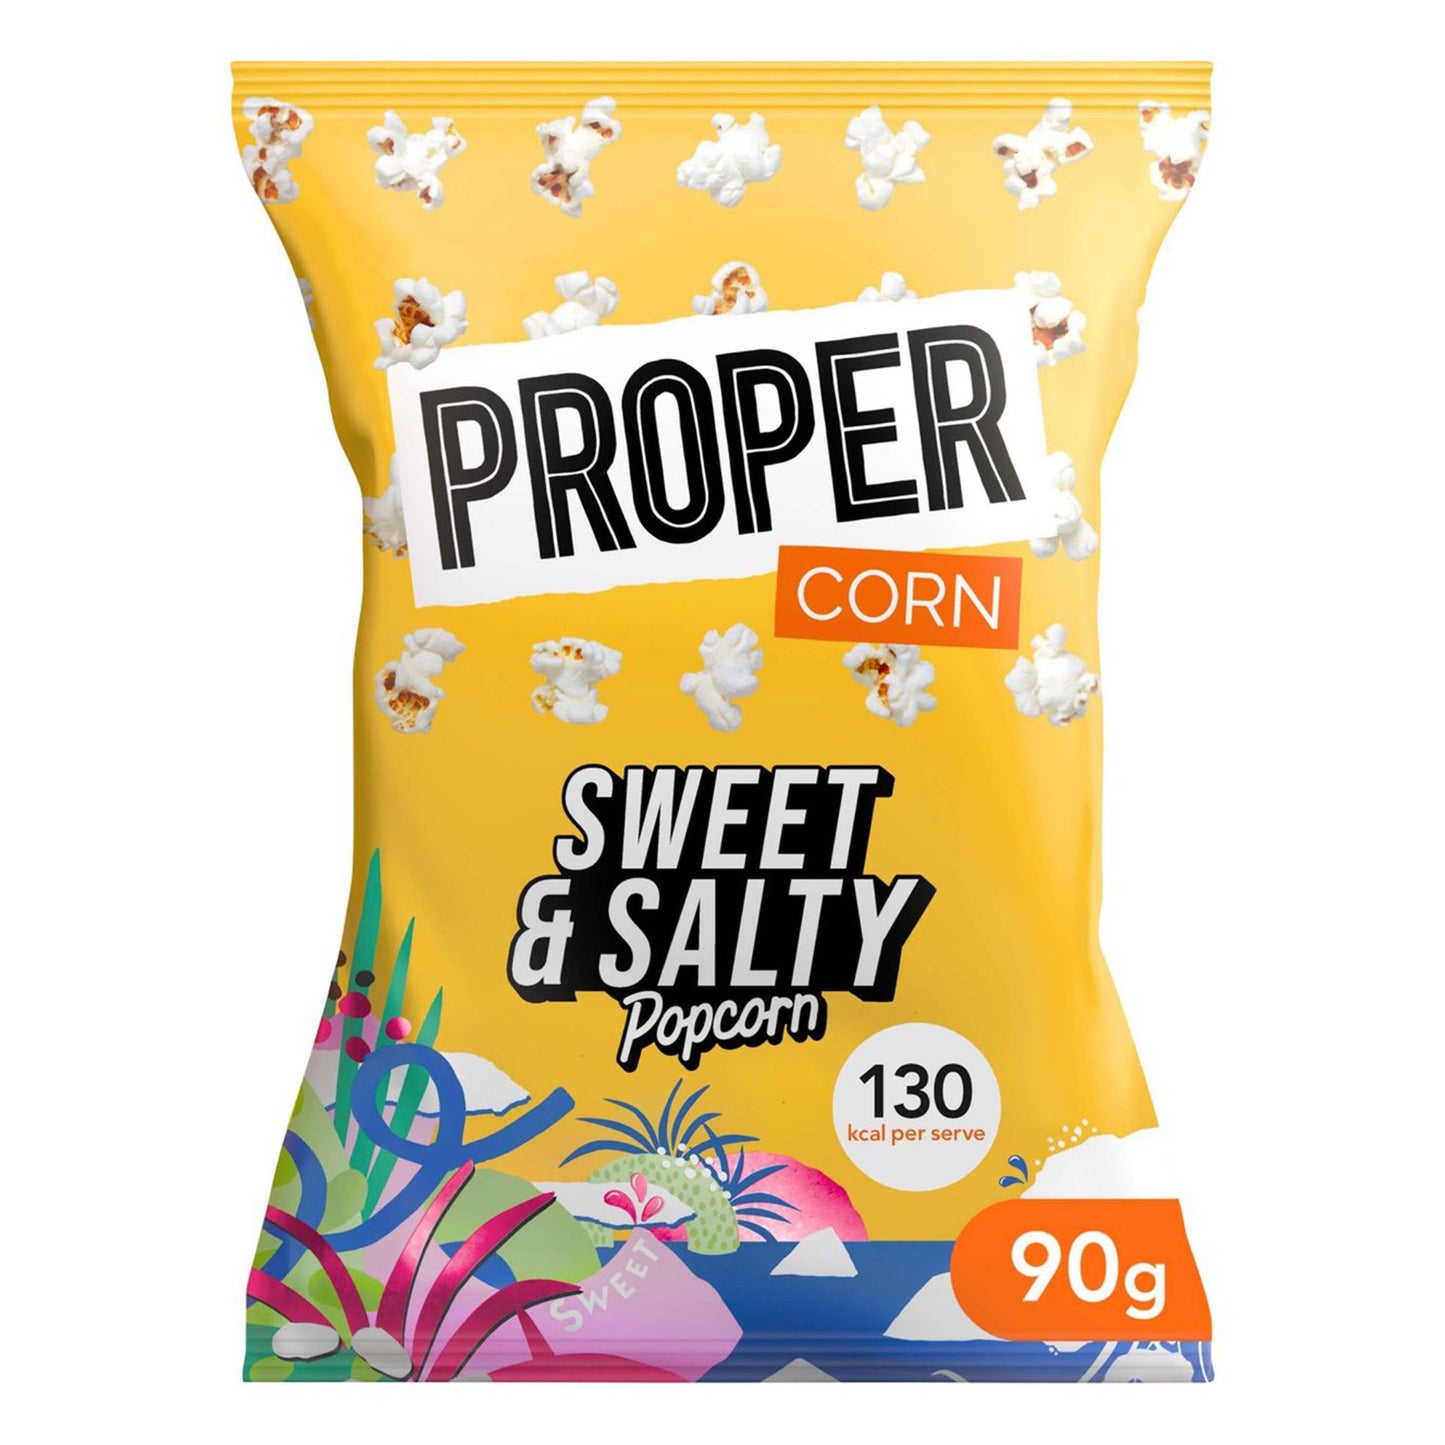 Propercorn Sweet & Salty Popcorn - 90g - British Snacks